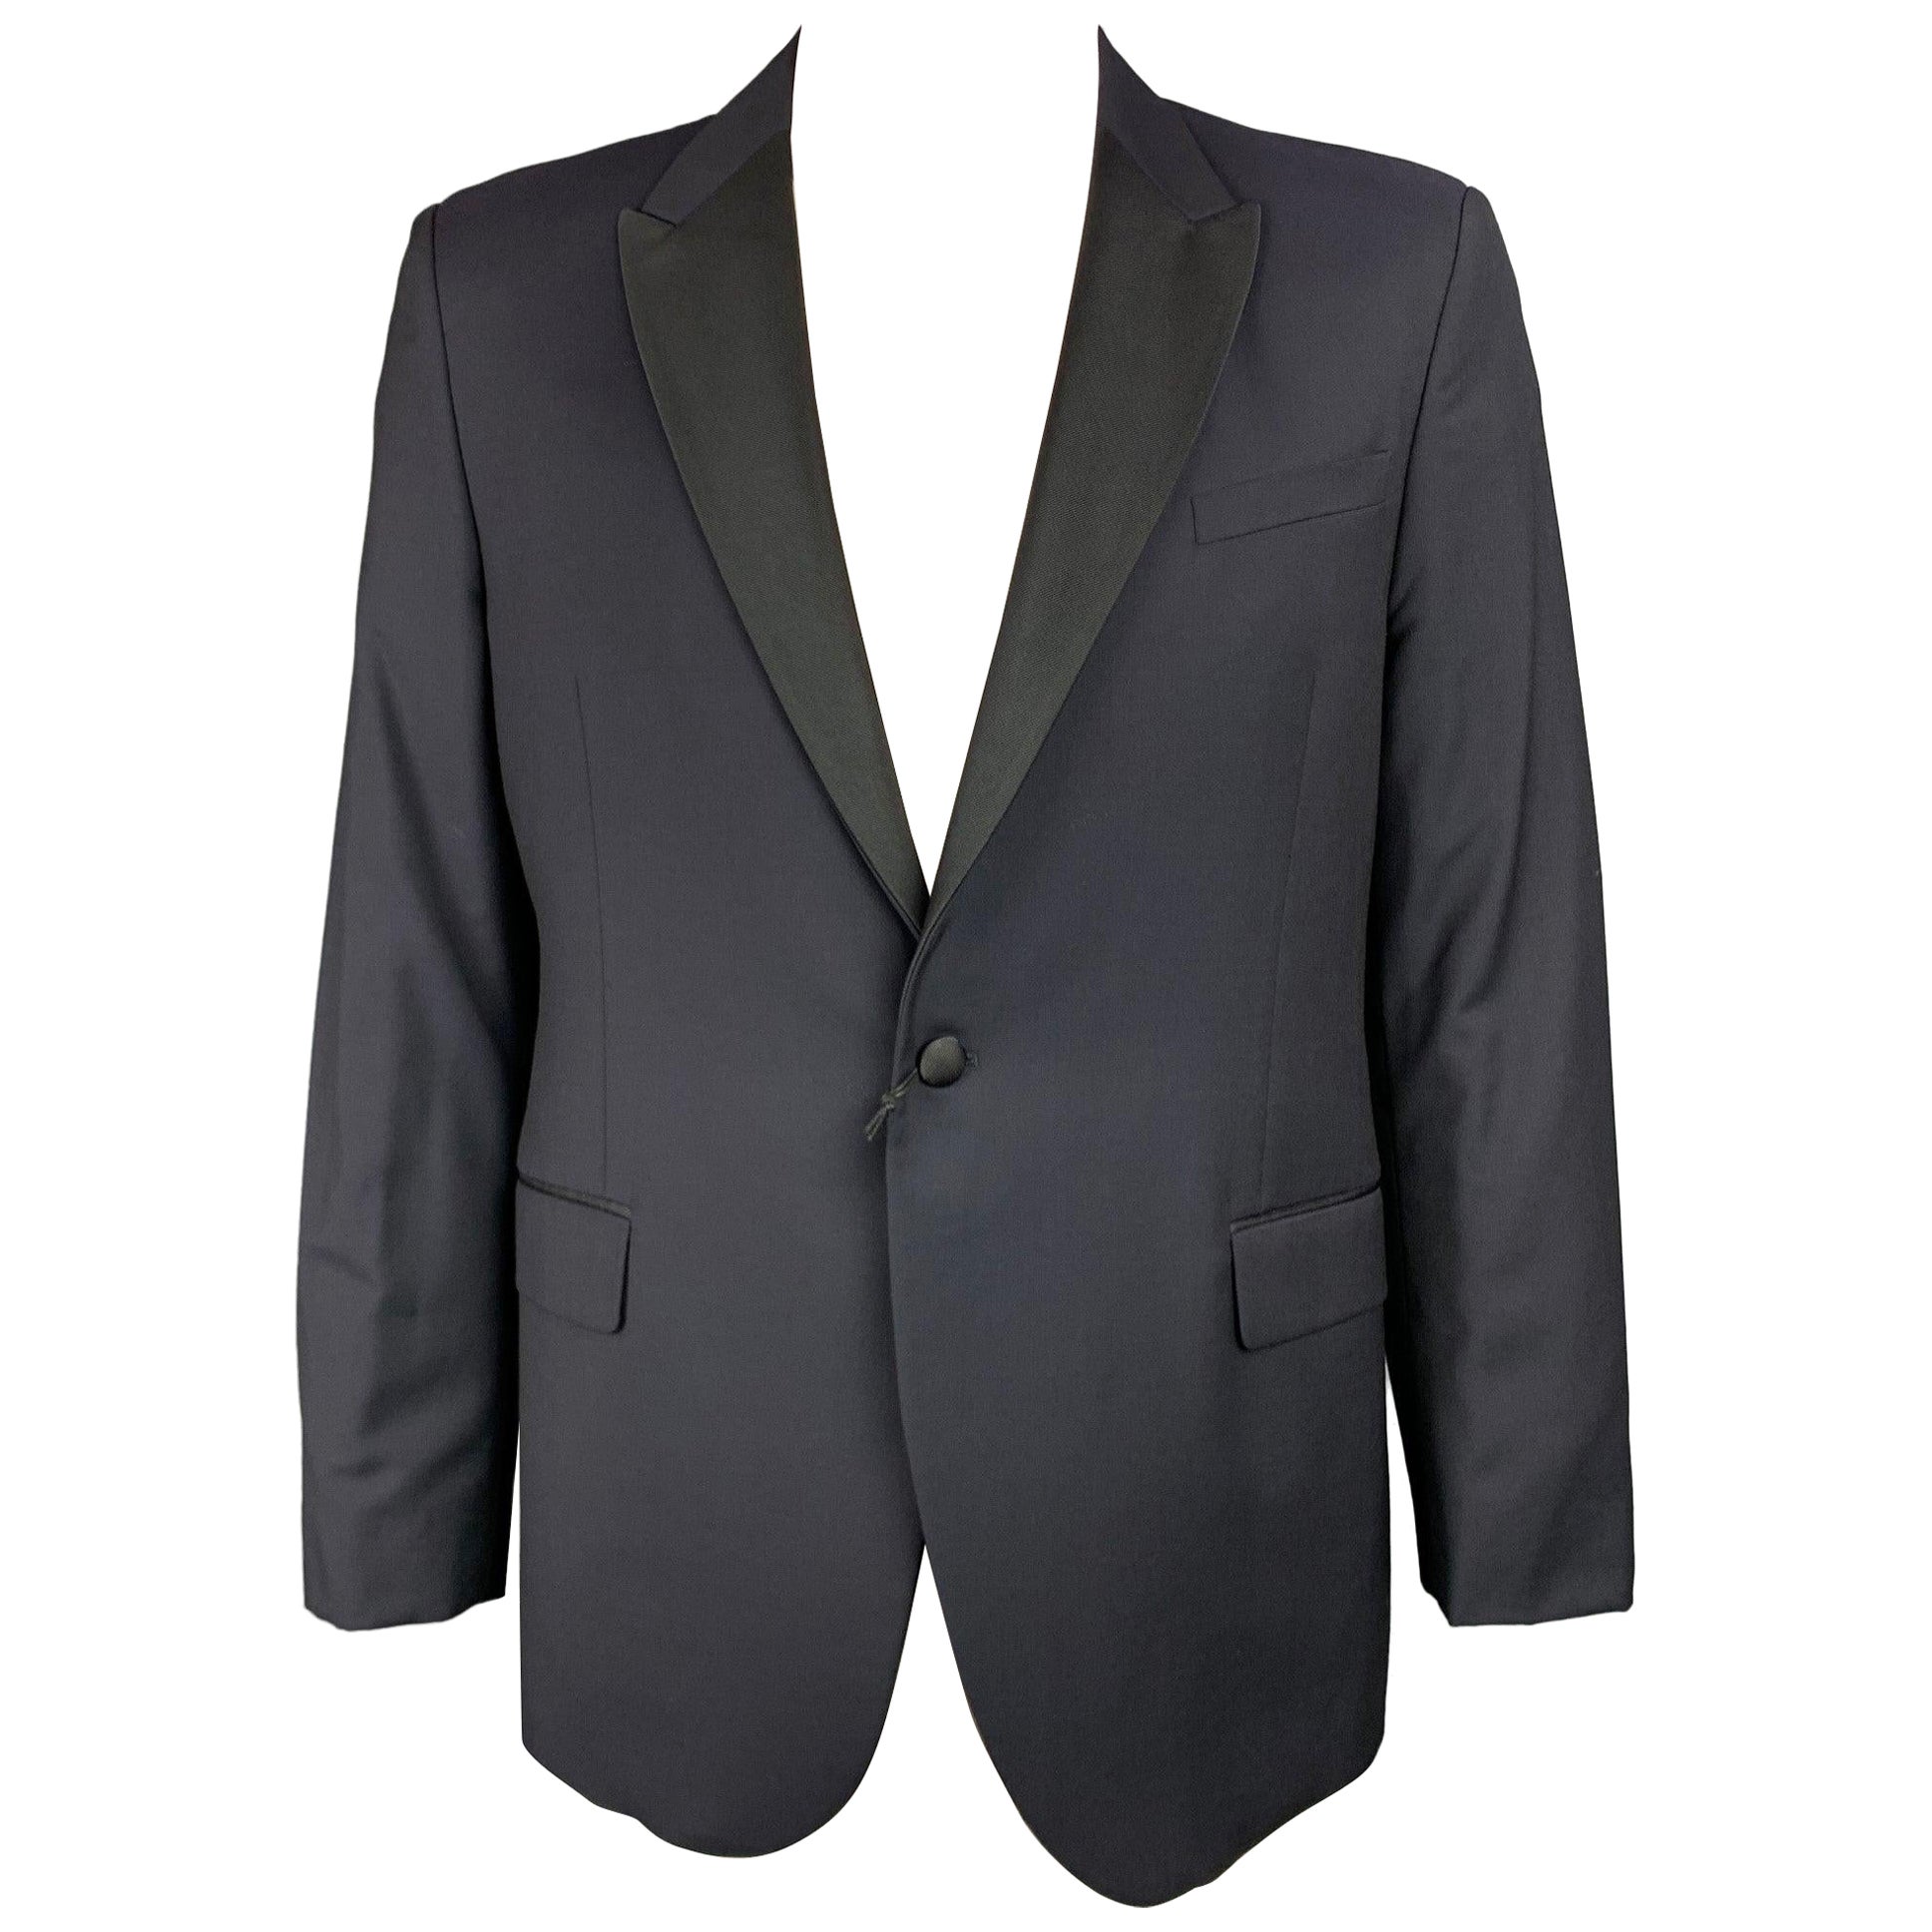 PAUL SMITH The Byard Size 46 Regular Black Wool / Mohair Peak Lapel Sport Coat